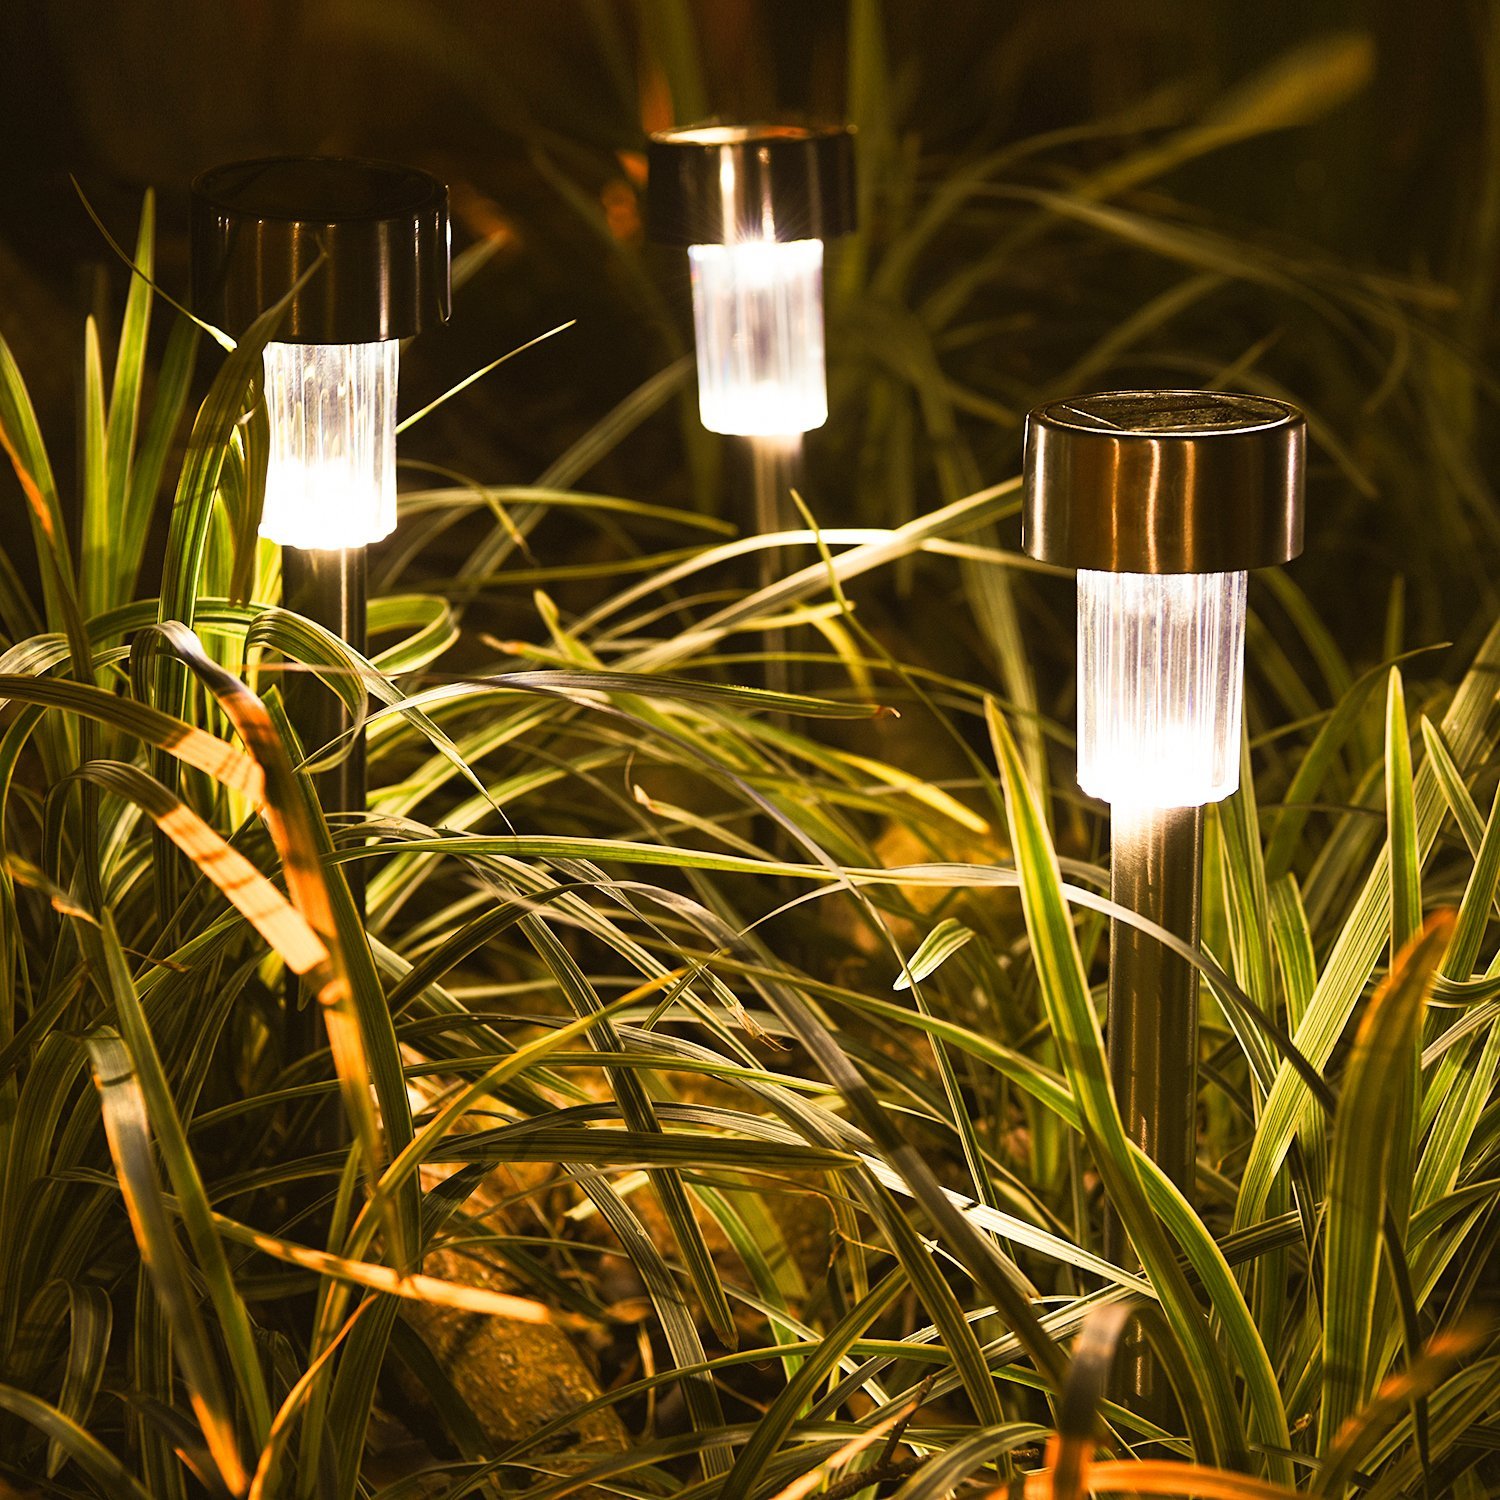 18 Striking Outdoor Lighting Ideas and Designs — RenoGuide ...